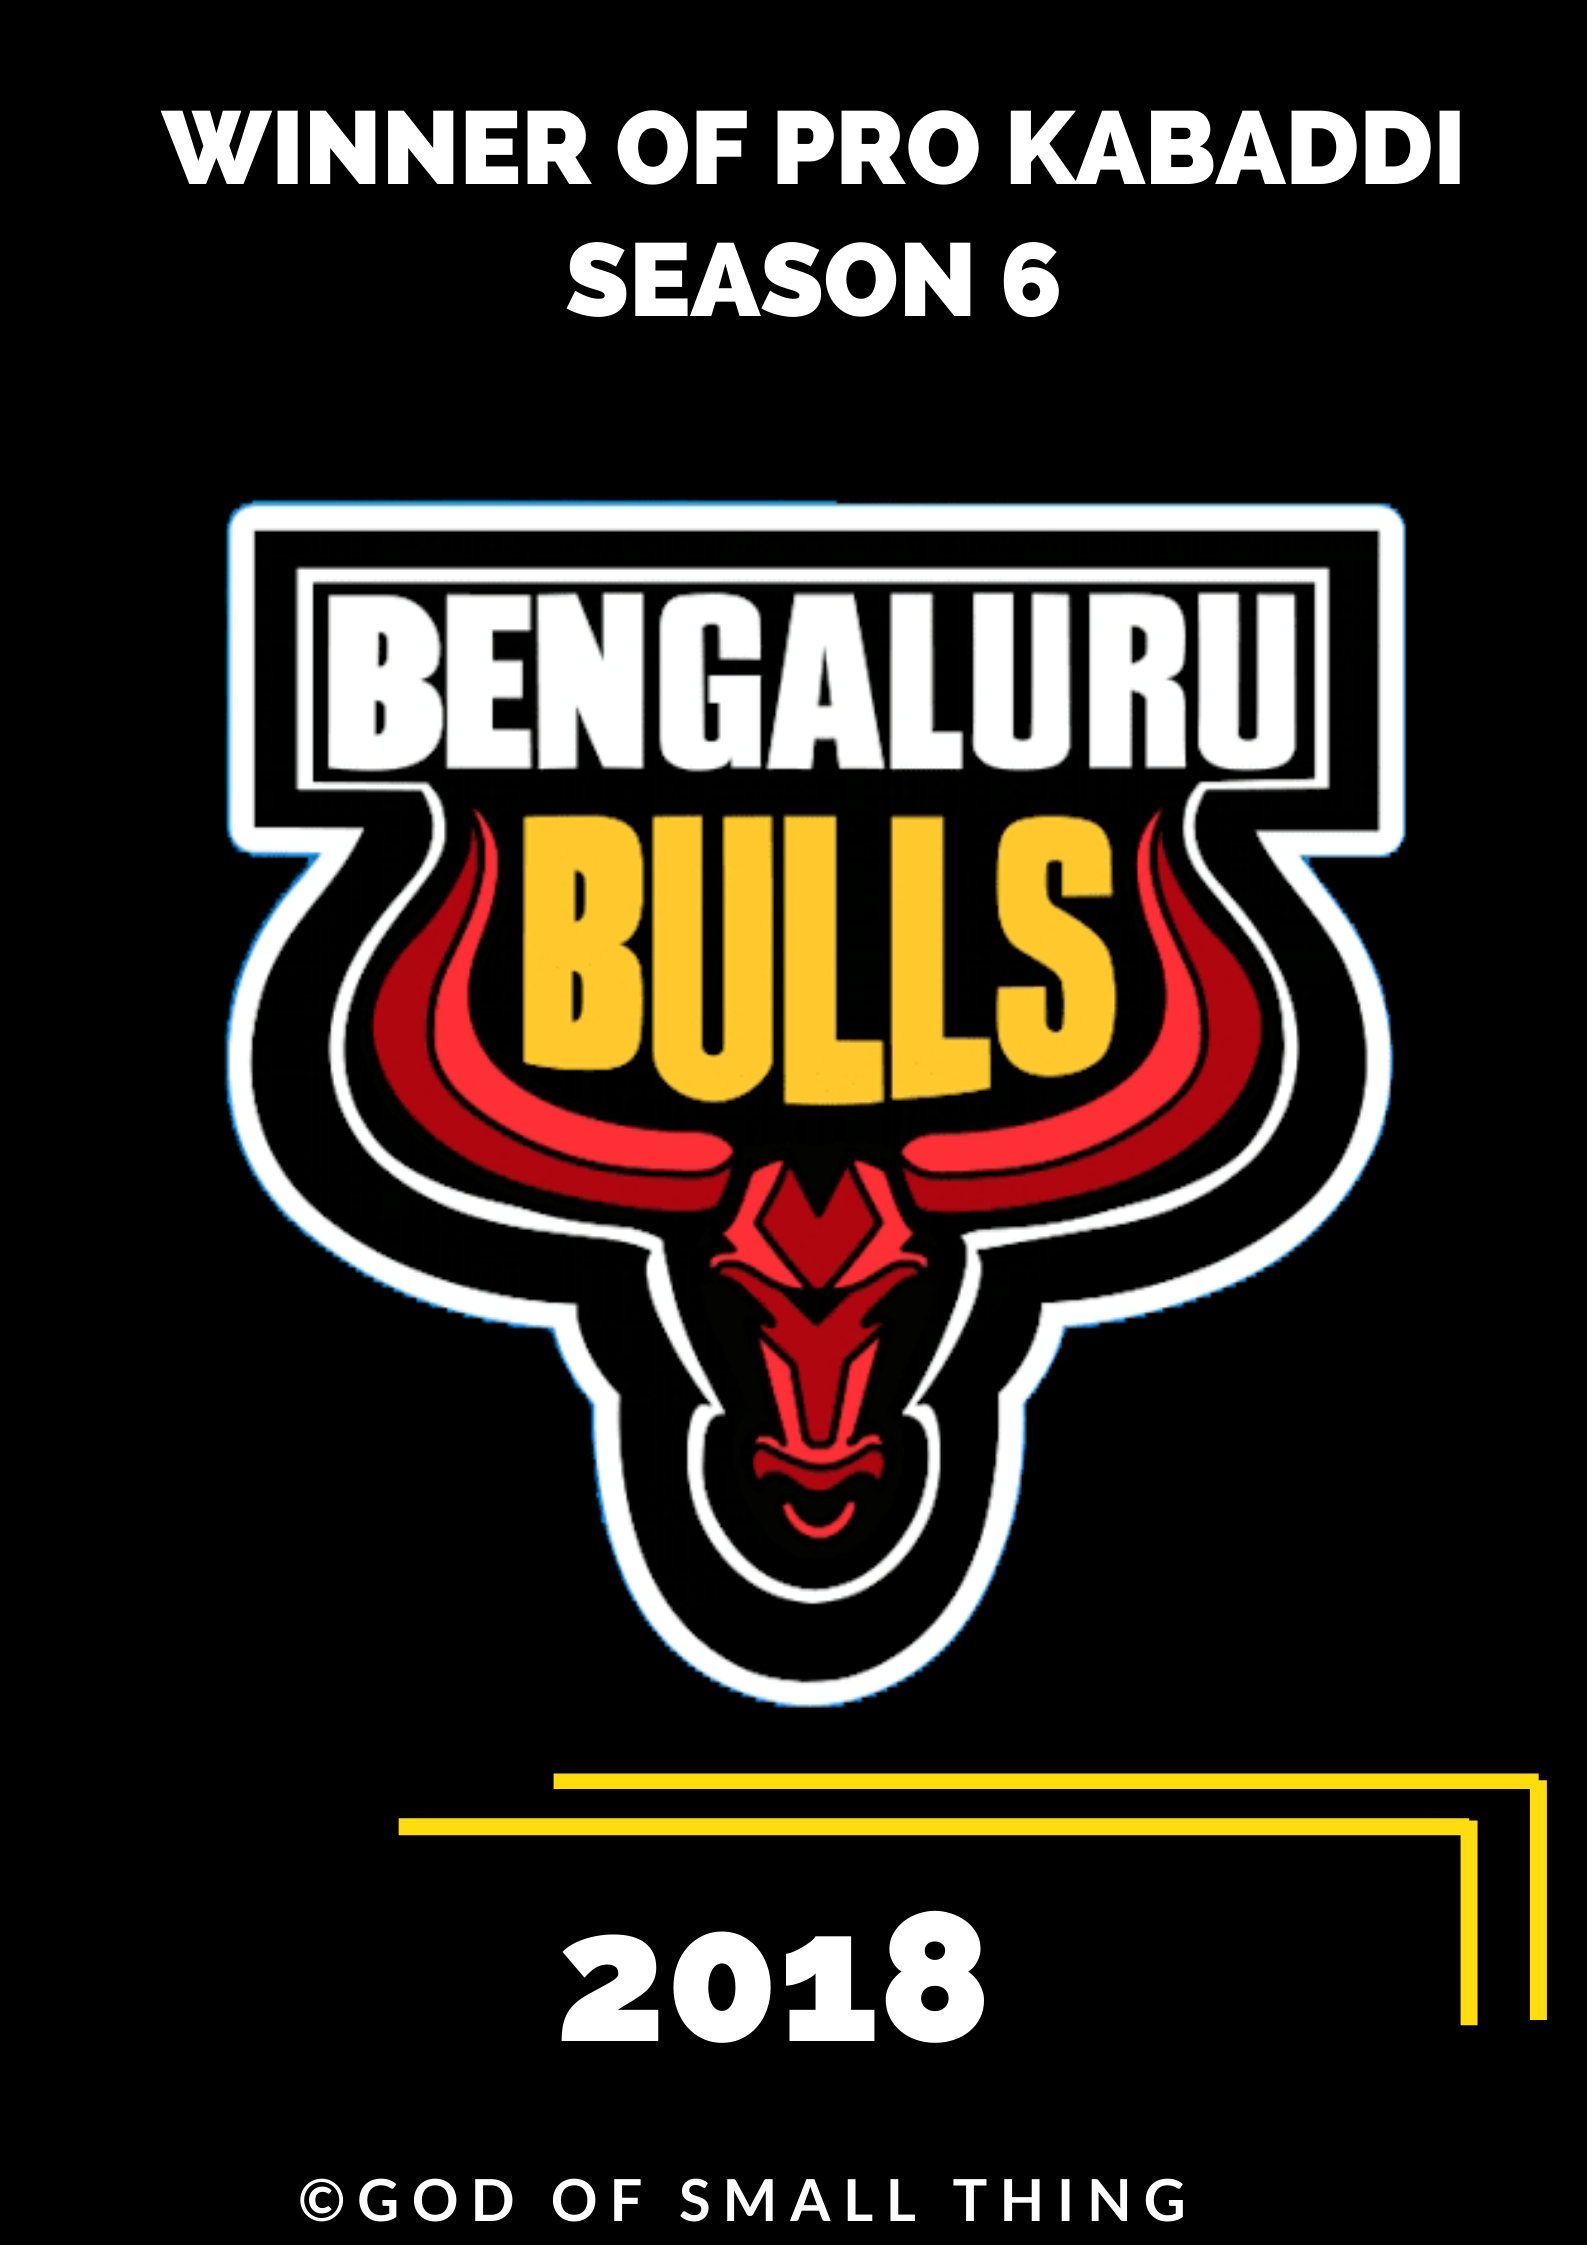 Pro Kabaddi Season 6 Winners Bengaluru Bulls